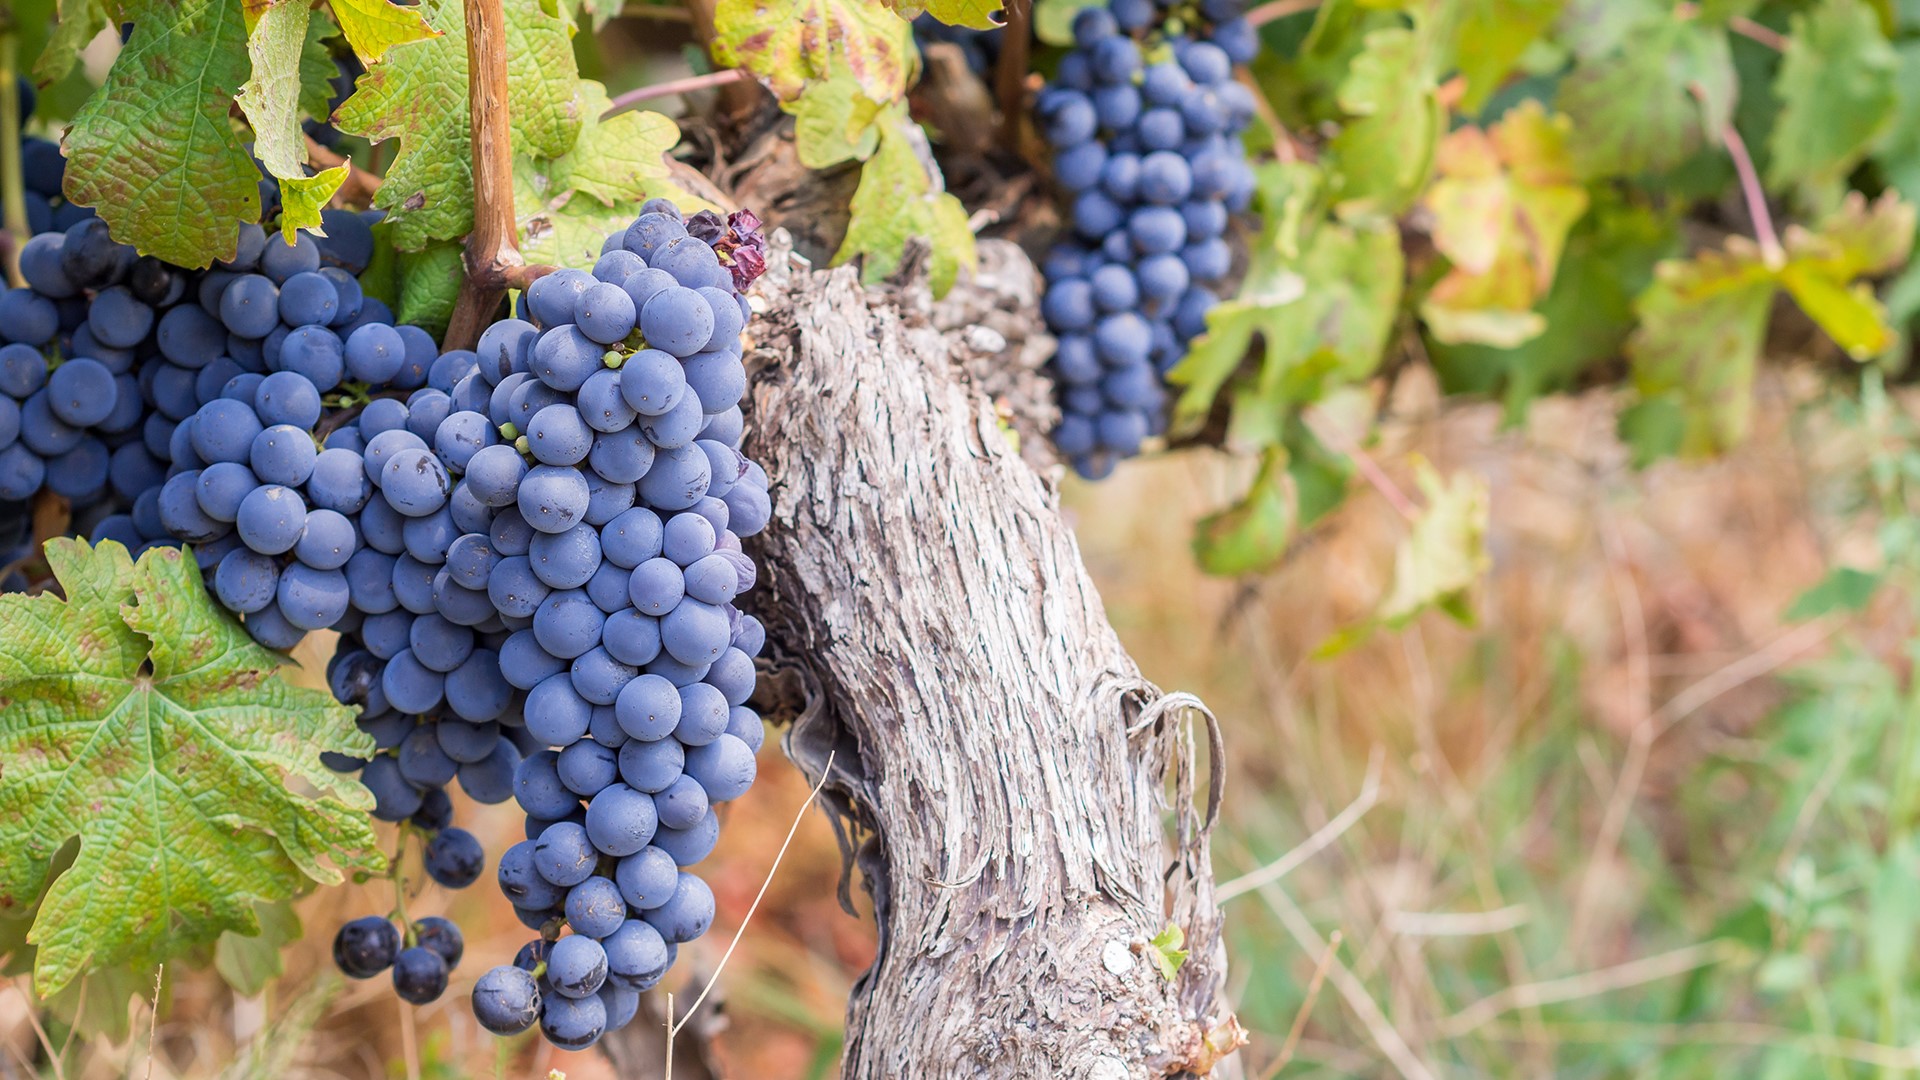 Fio_agri_farming_south_africa_winelands_vineyard